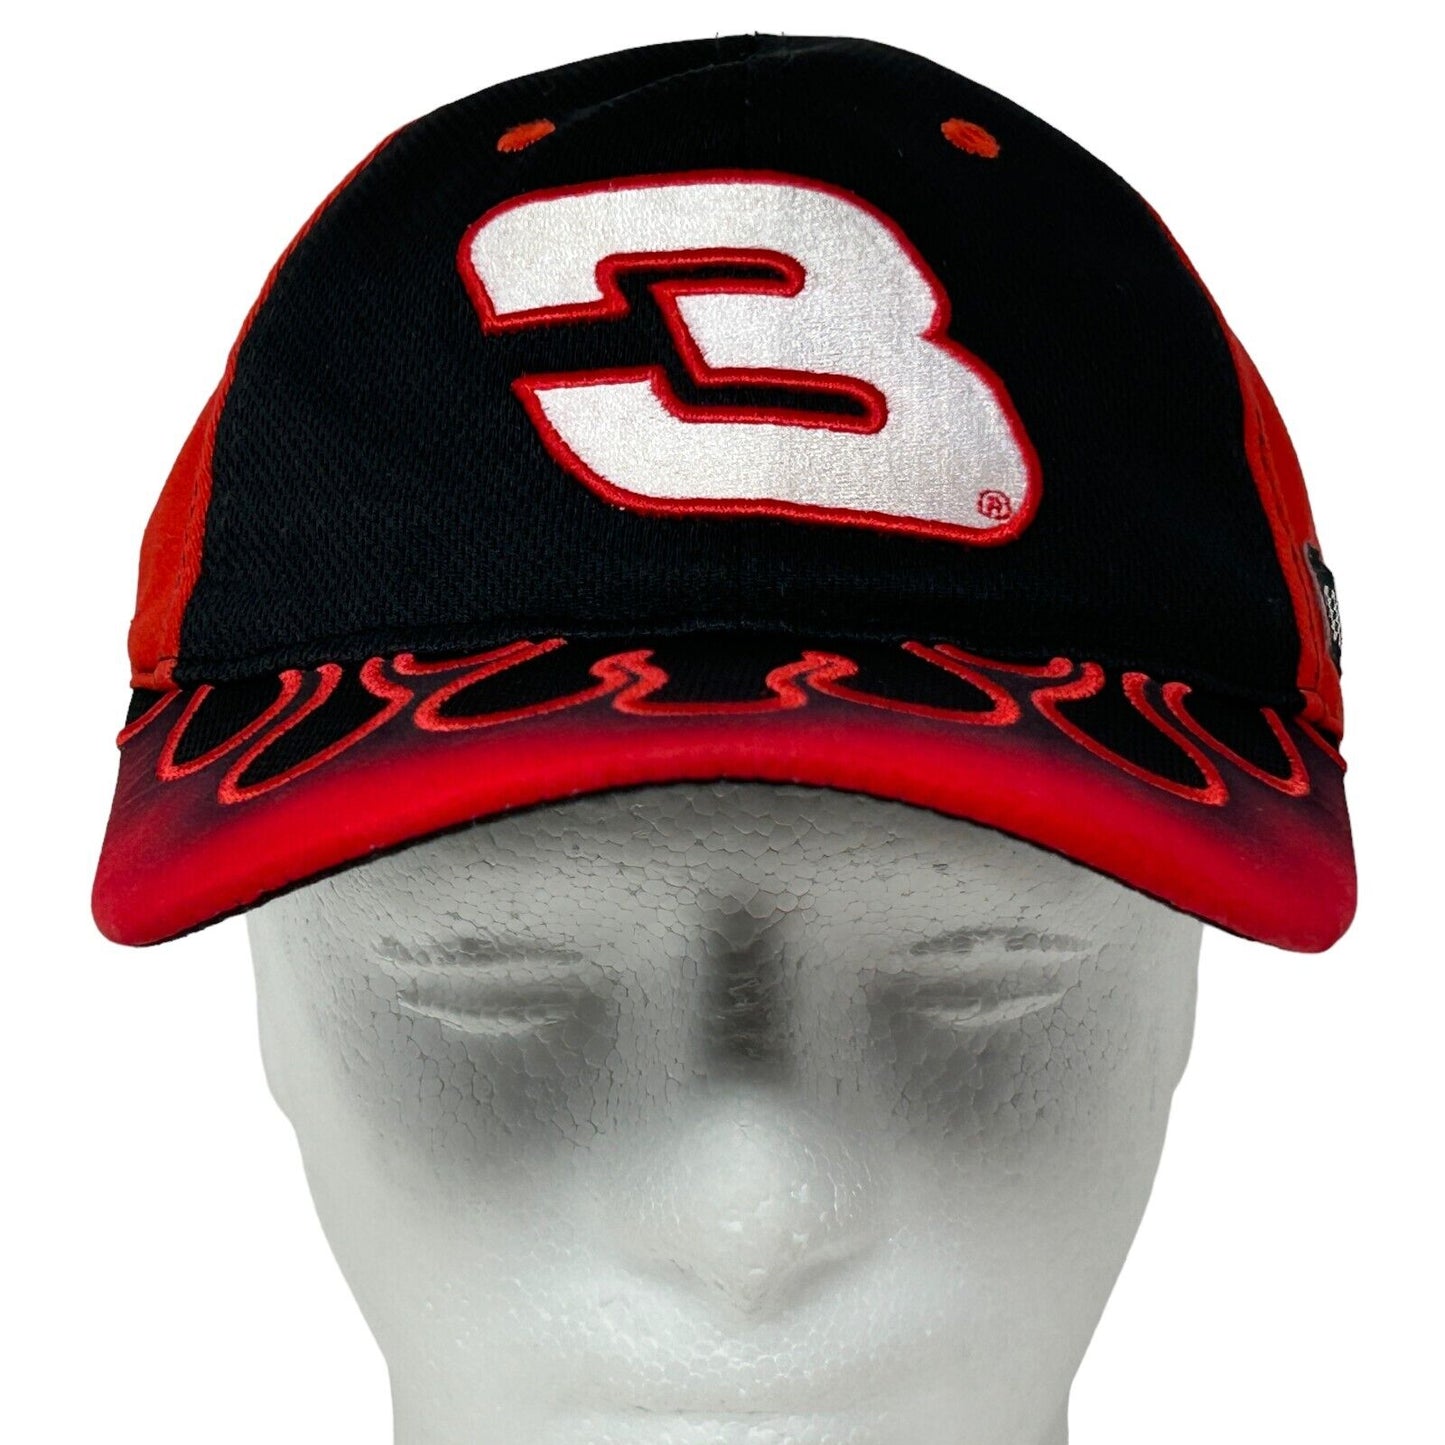 Dale Earnhardt 3 Flames Hat NASCAR RCR Richard Childress Racing Red Baseball Cap